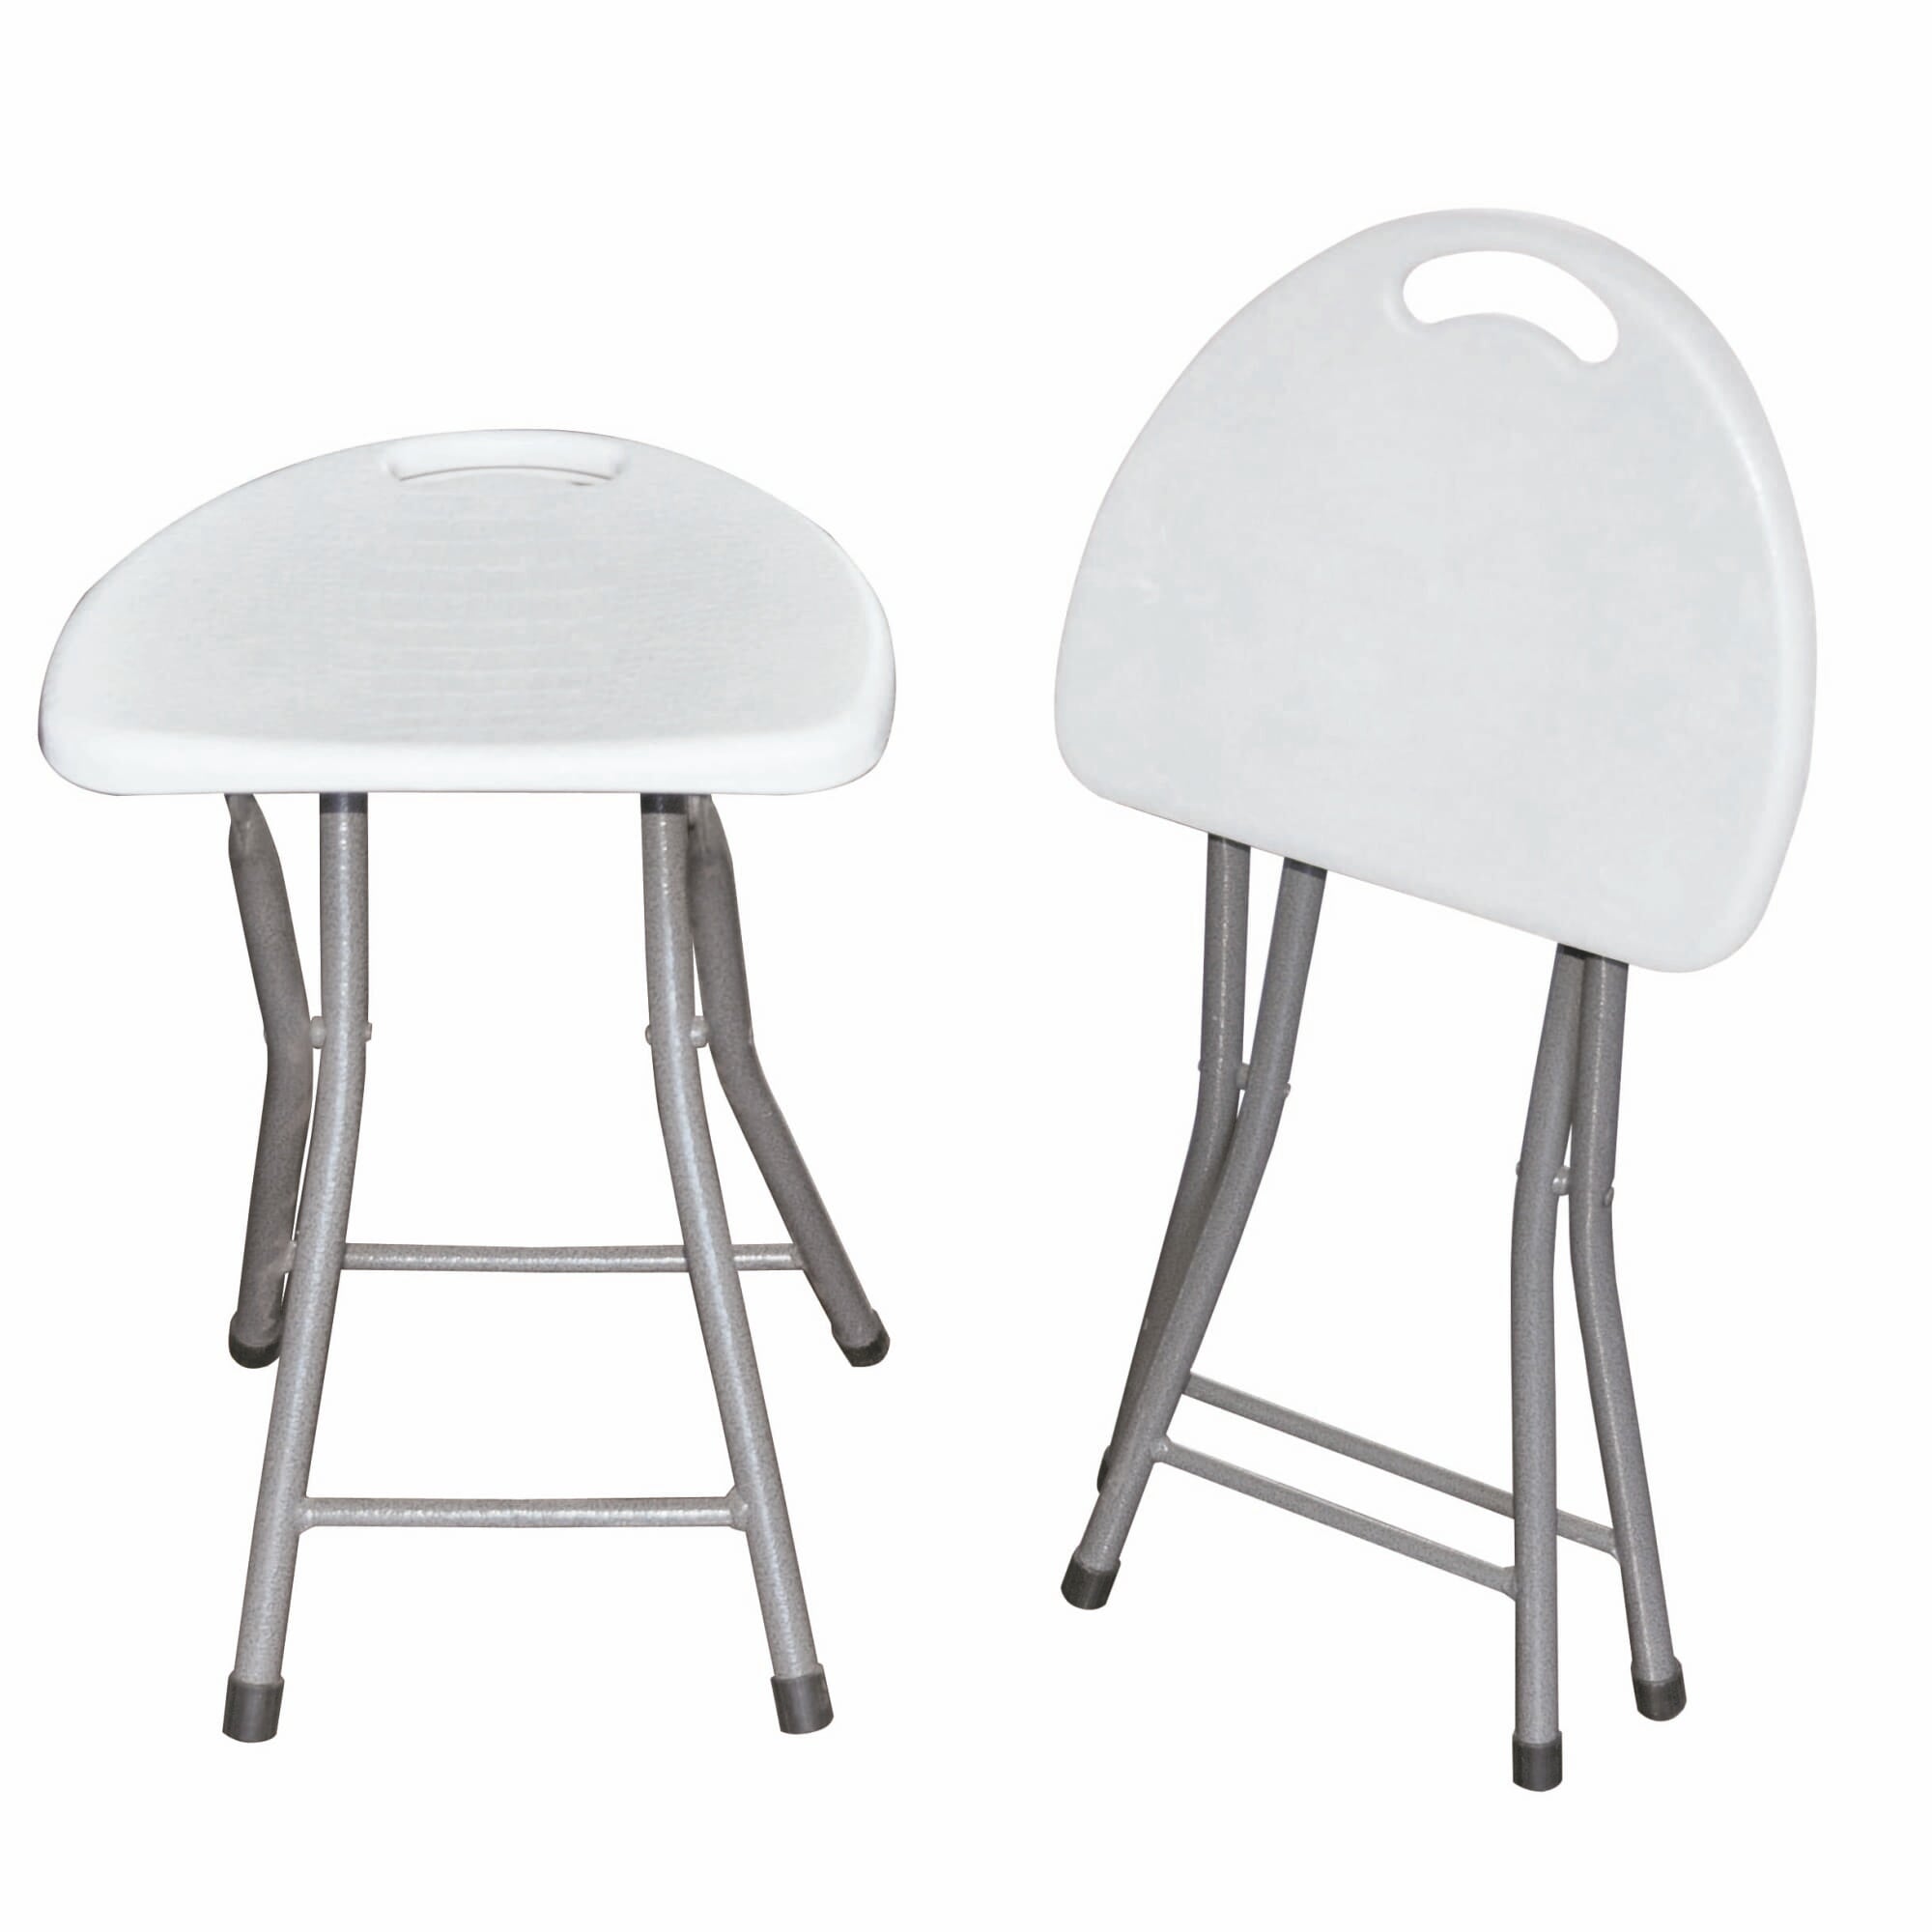 Garbar Simple low folding stool inside, white outside